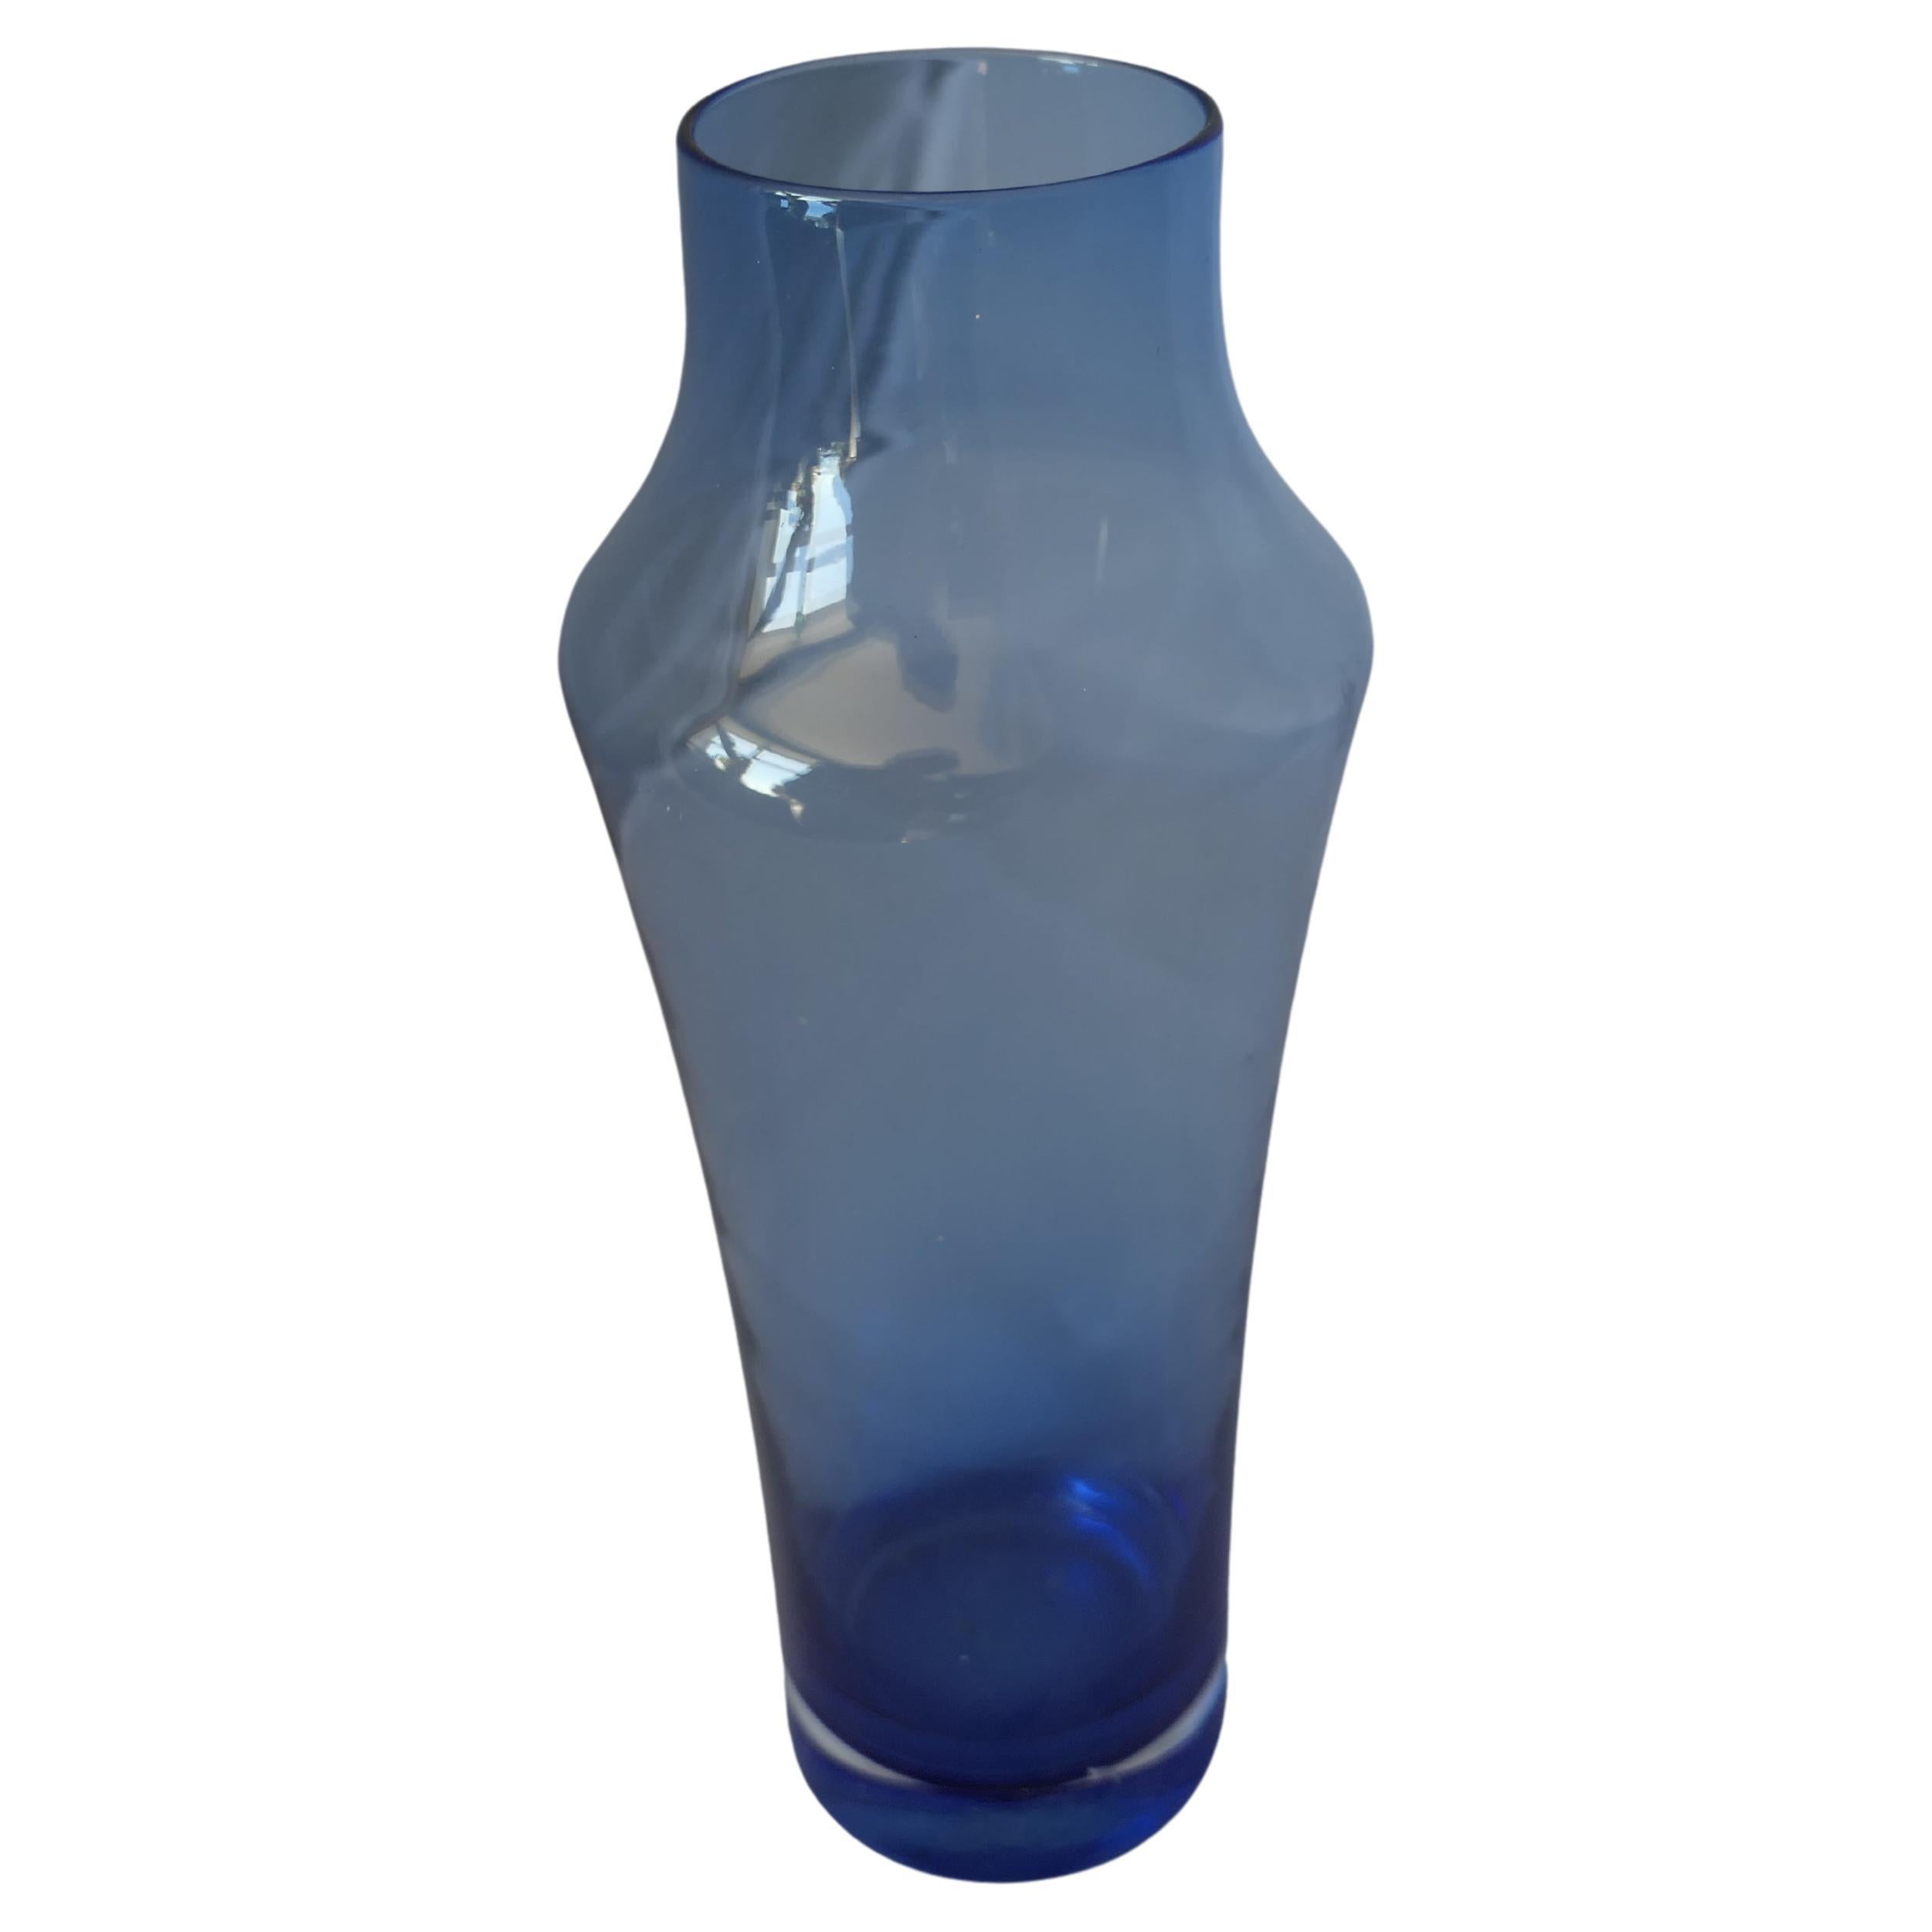 1960s Blue Glass Vase by Tamara Aladin for Riihimäen Lasi Oy  A fine hand blown 